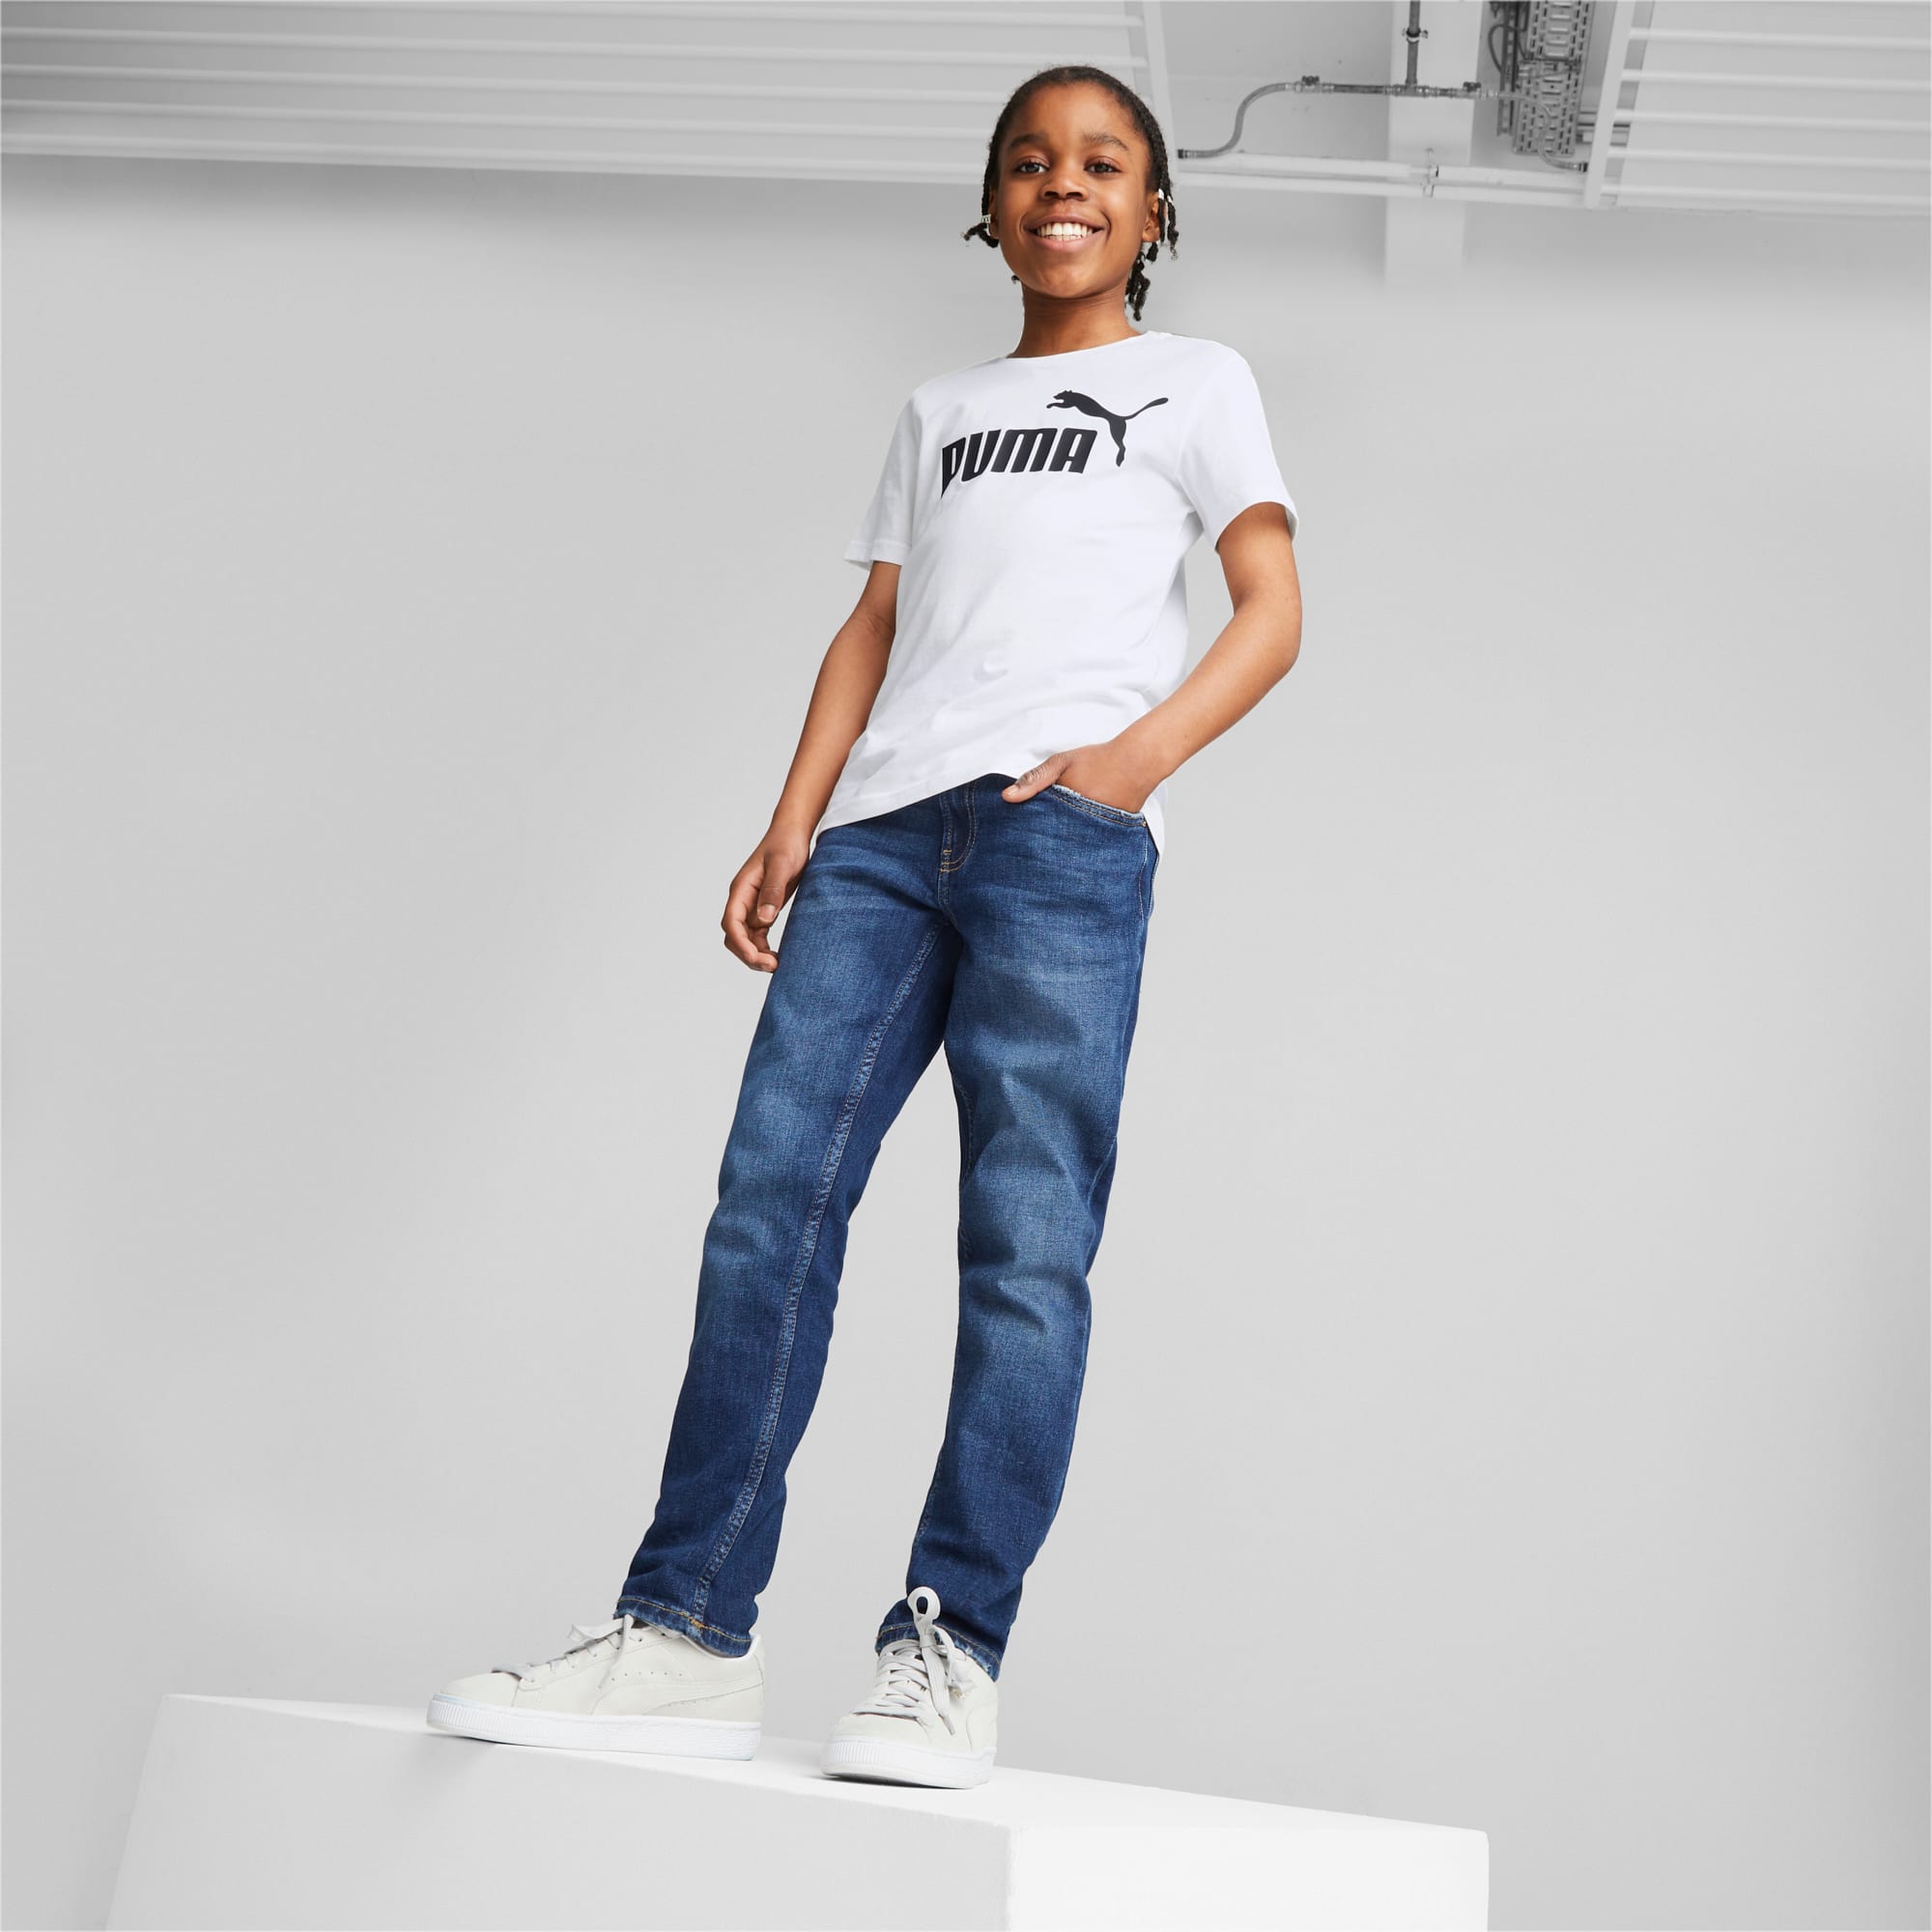 T-shirt PUMA enfant 14 ans logo imprimé camouflage bleu - Tendance mode ado  - garçon fille - adolescent